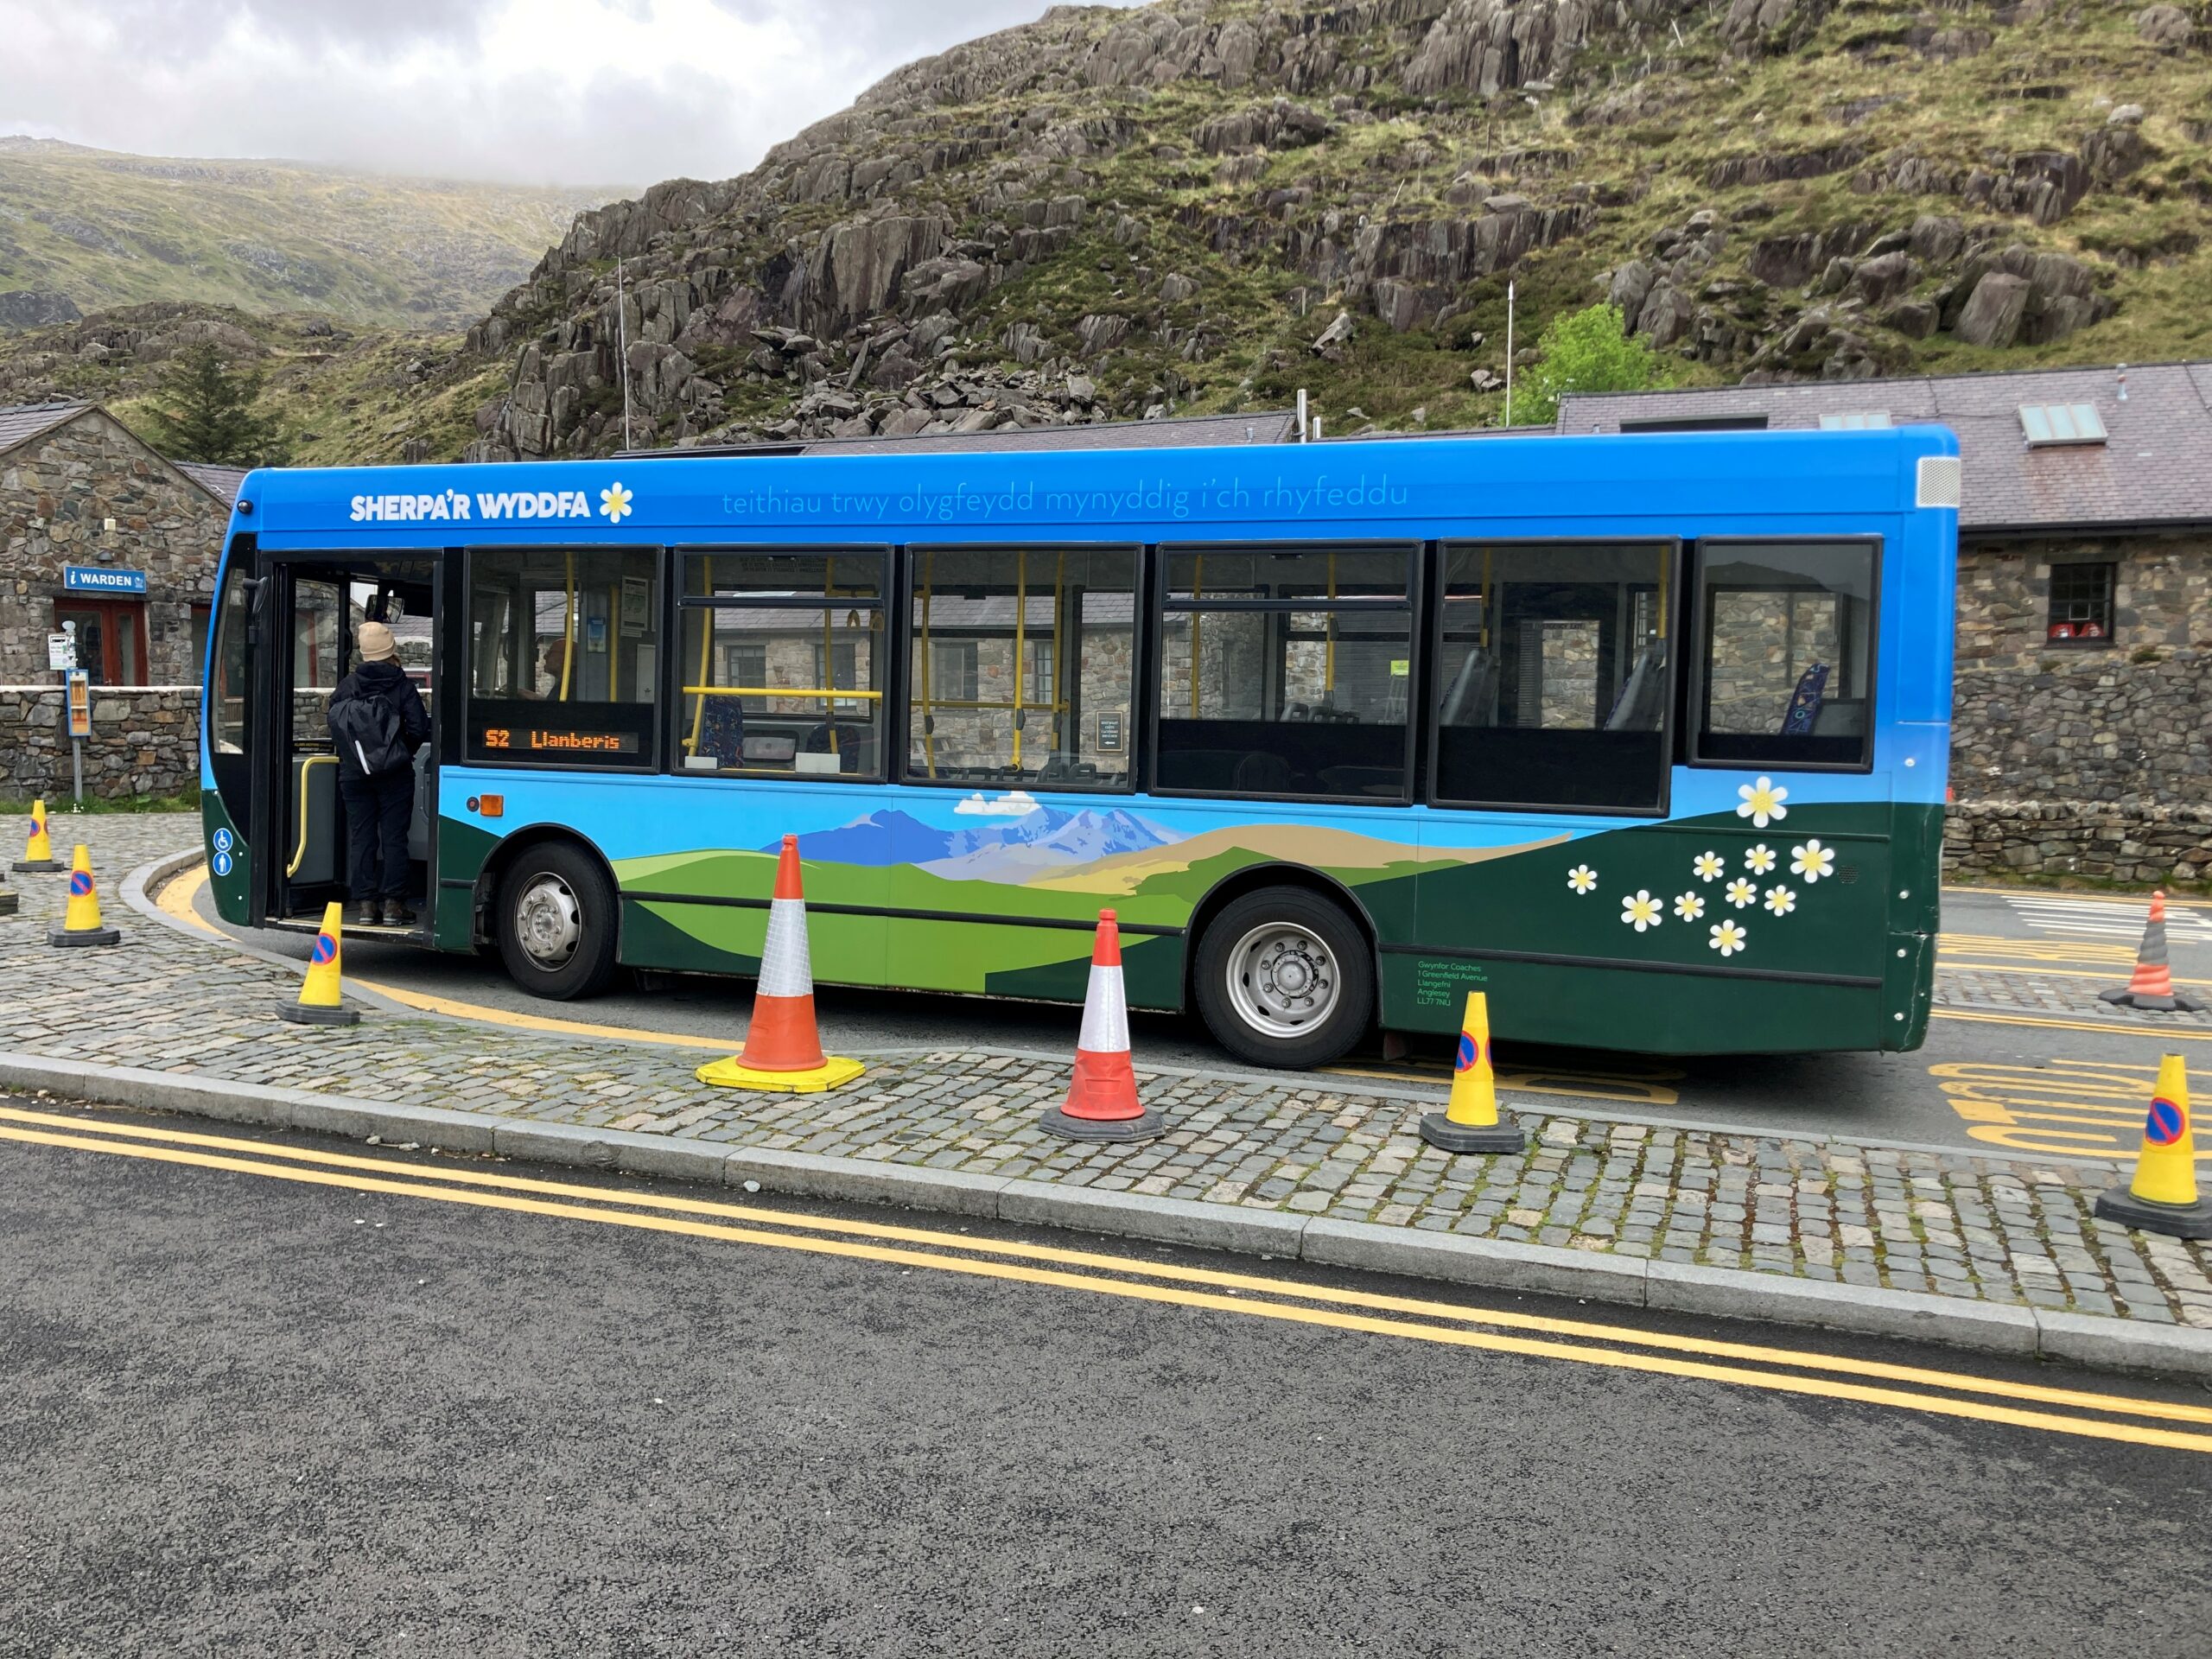 Introducing ‘Sherpa’r Wyddfa’ – Snowdonia’s new bus service